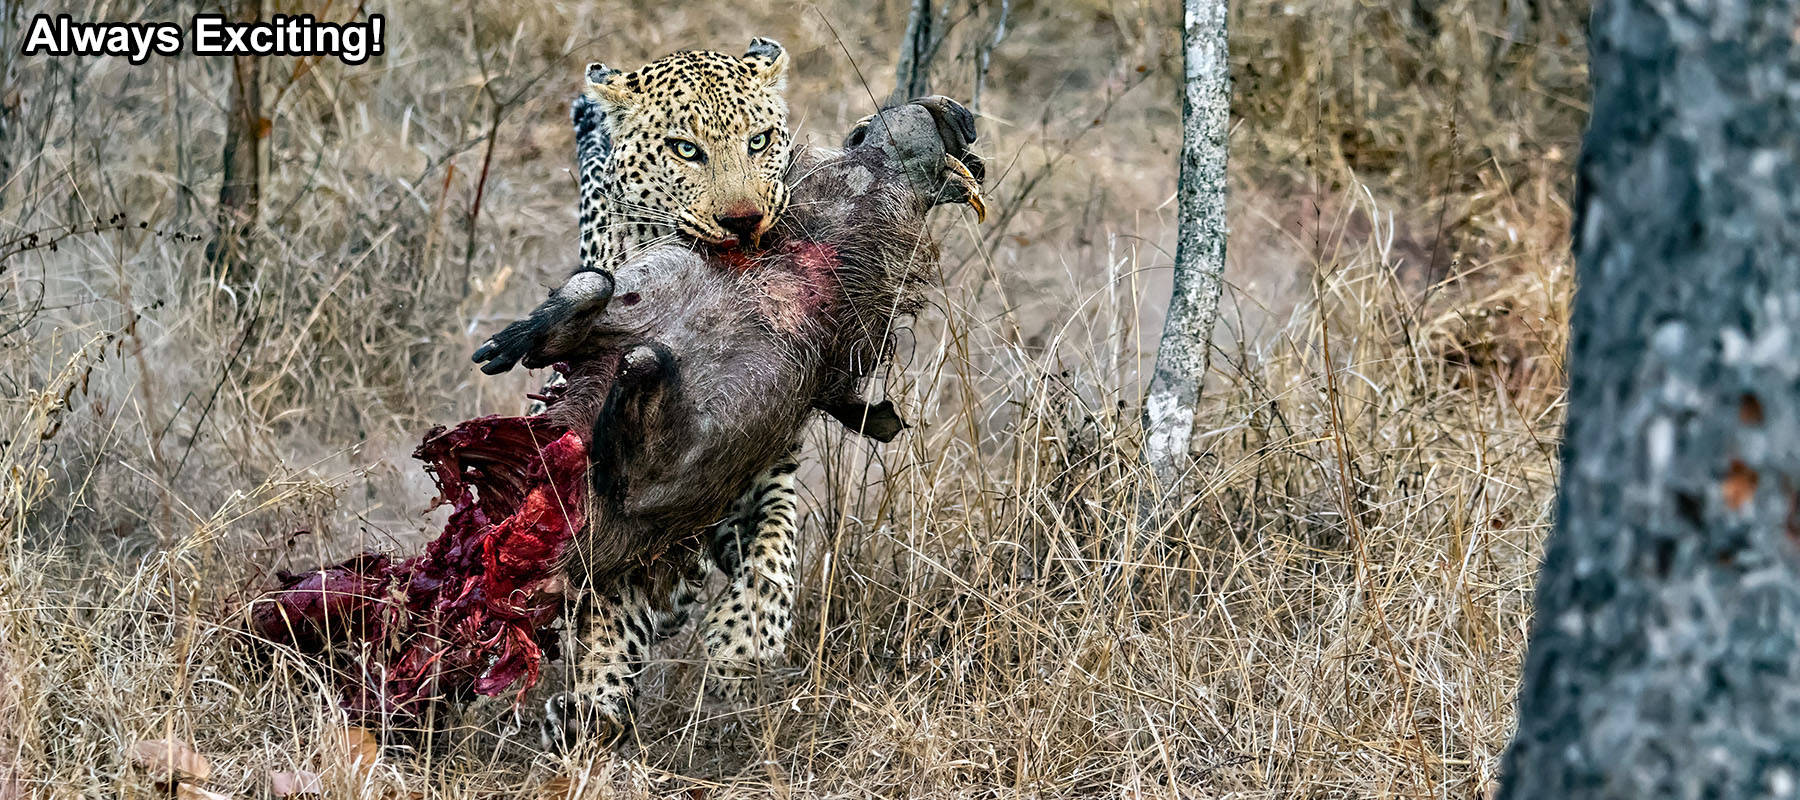 Leopard with a kill on a wildlife photo safari in South Africa, Kenya, Tanzania, Uganda